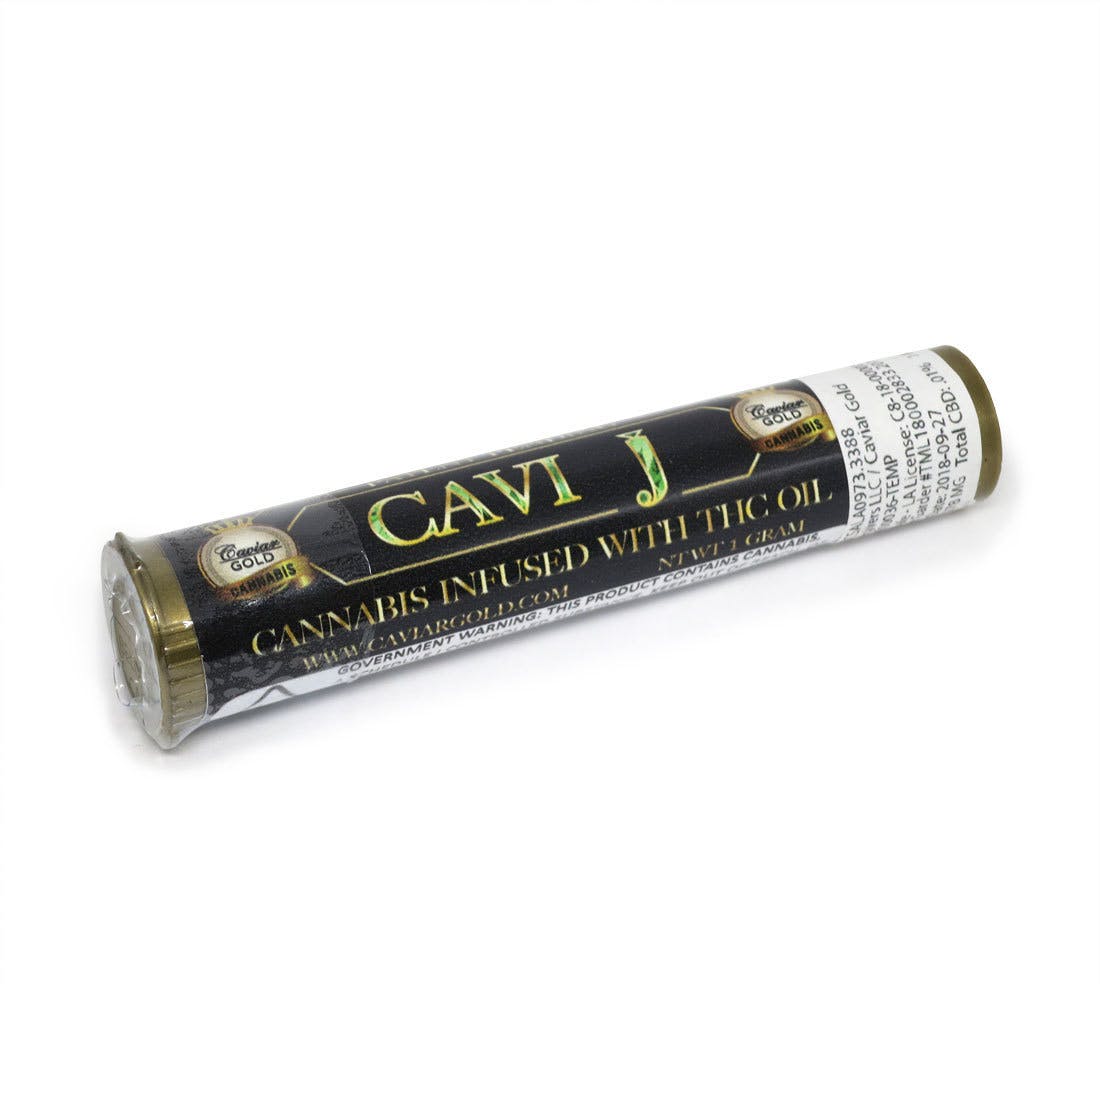 Cavi J by Caviar Gold